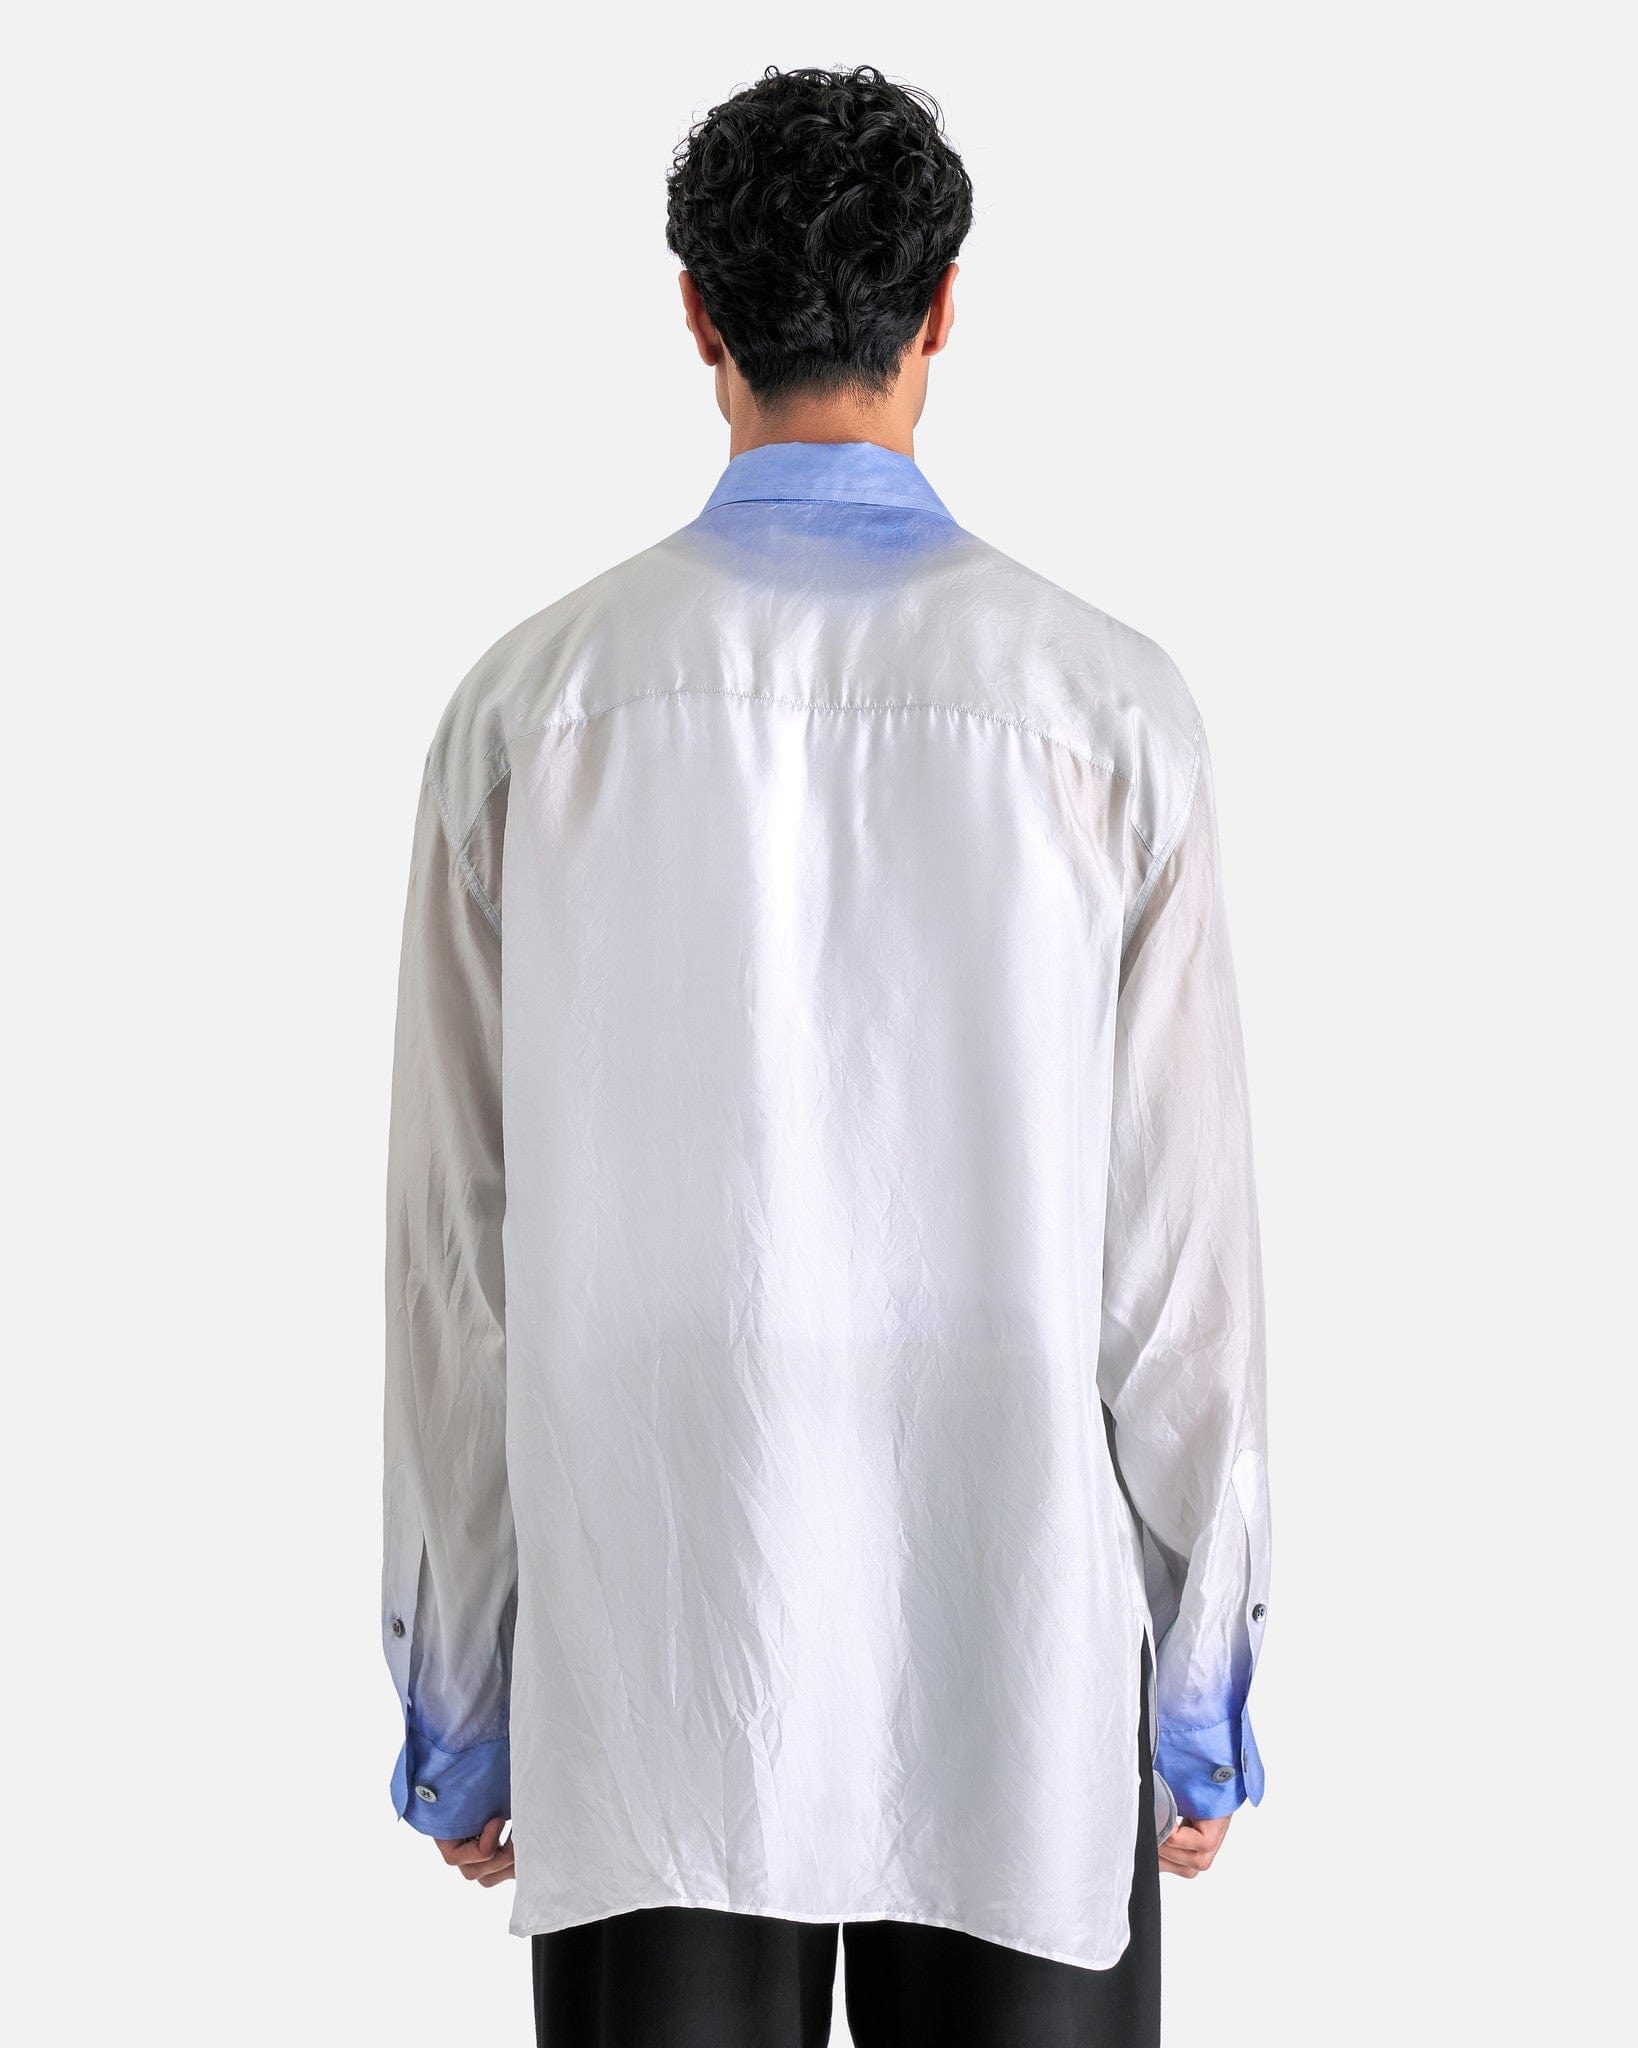 Dries Van Noten Men's Shirts Calander Tris Shirt in Blue